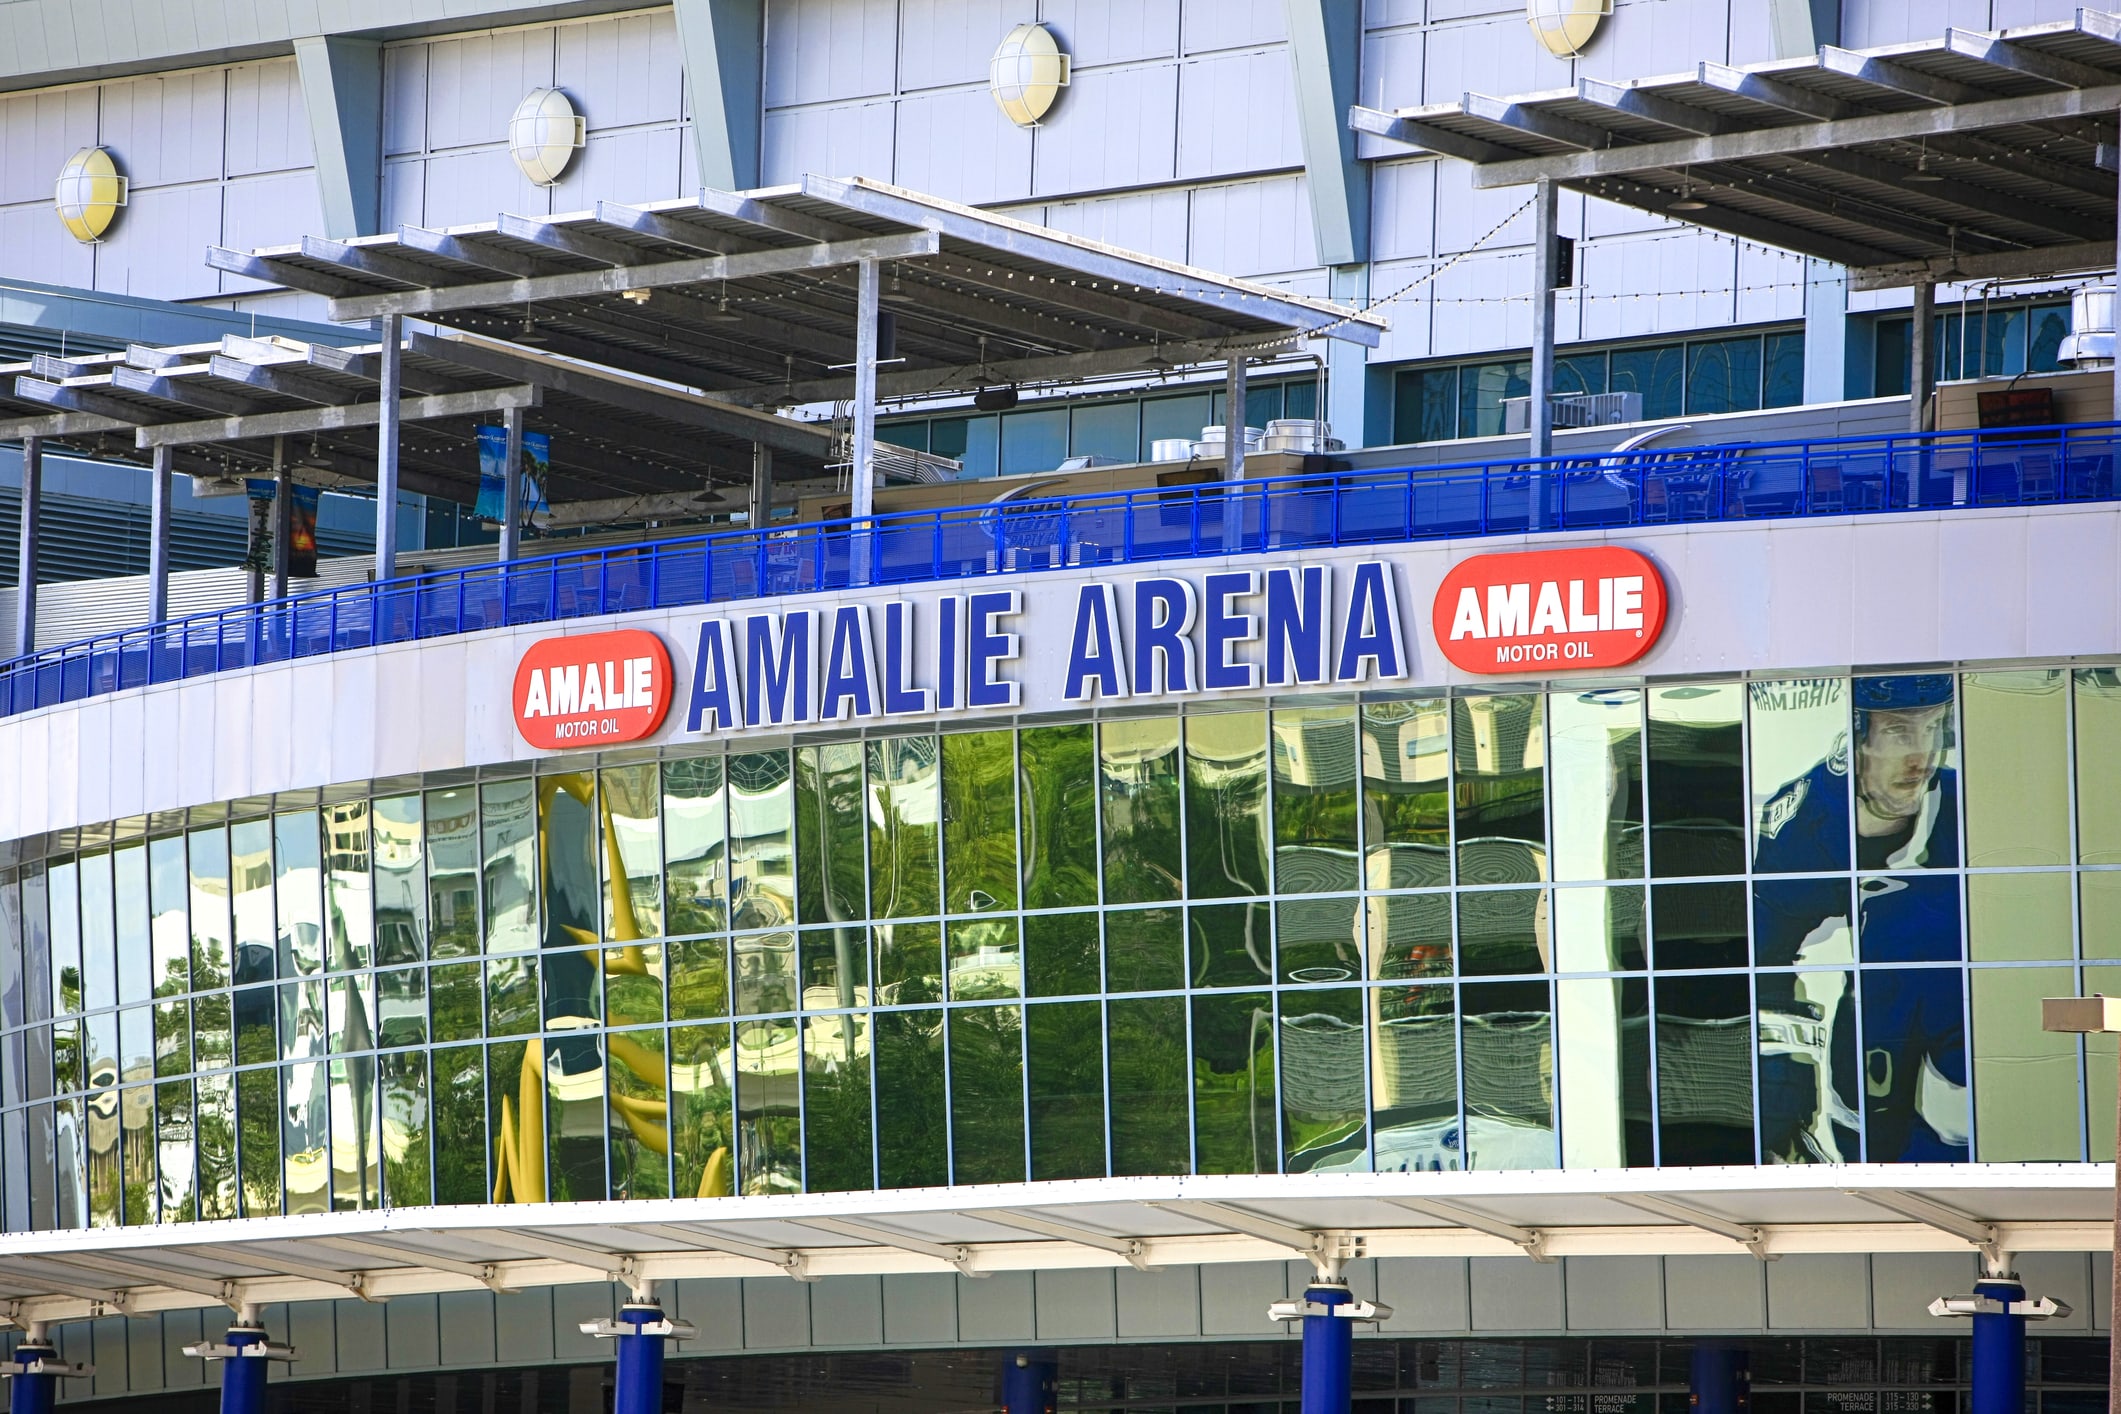 Arena Info  Amalie Arena